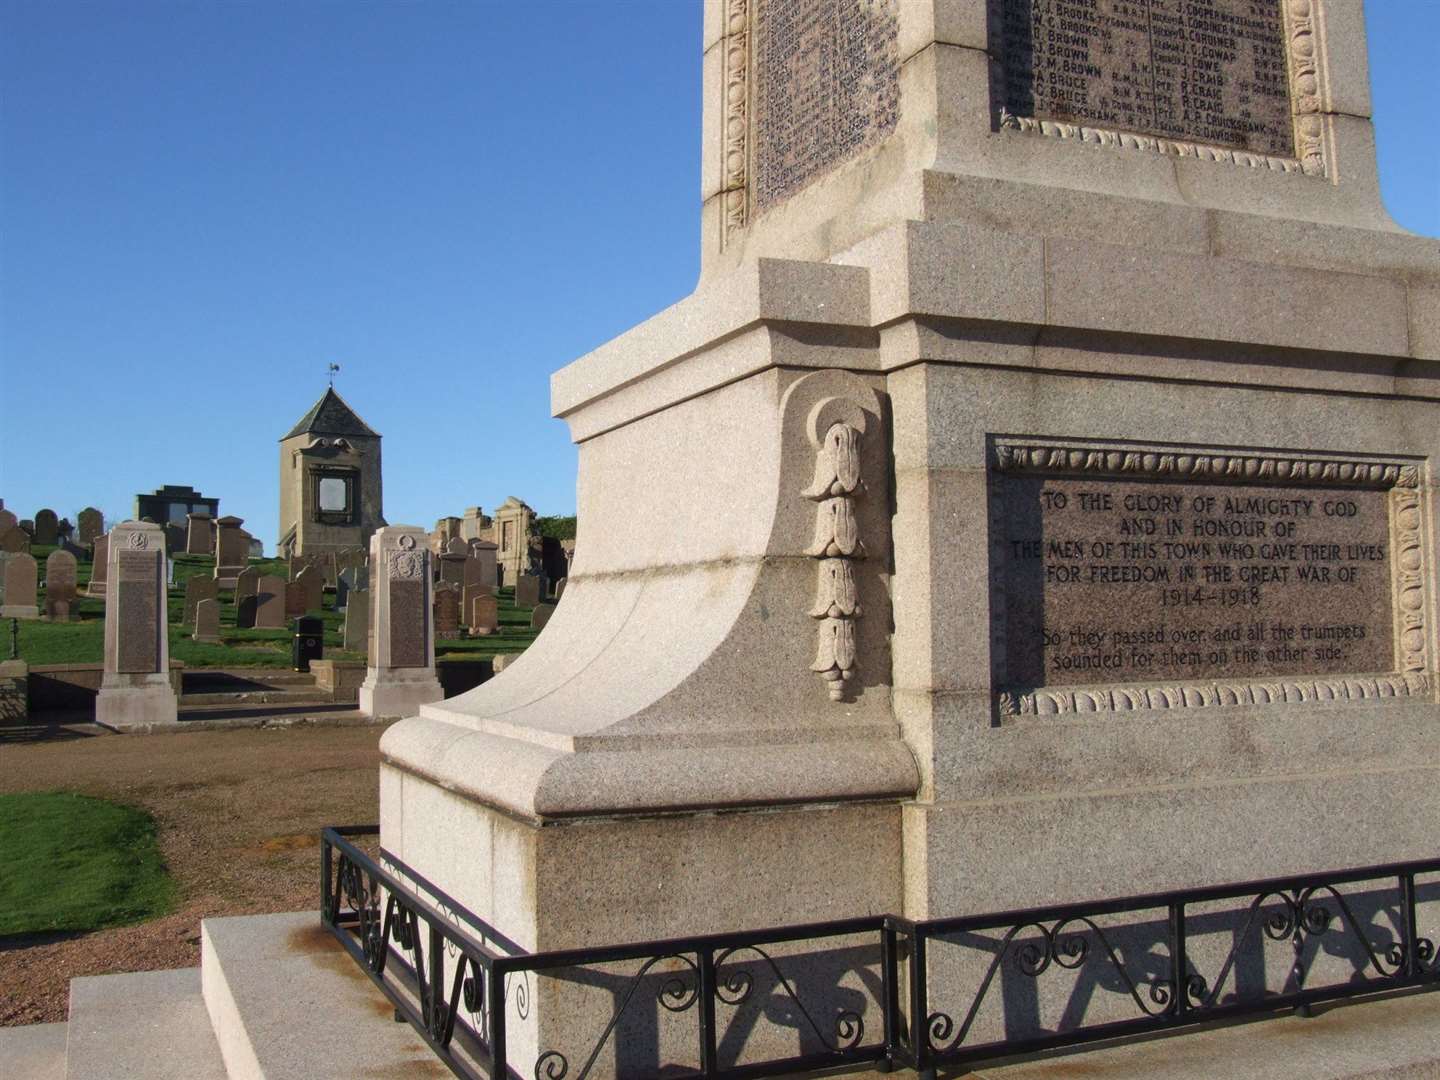 Peterhead war memorials are undergoing repair and conservation works after receiving funding from the War Memorials Trust.